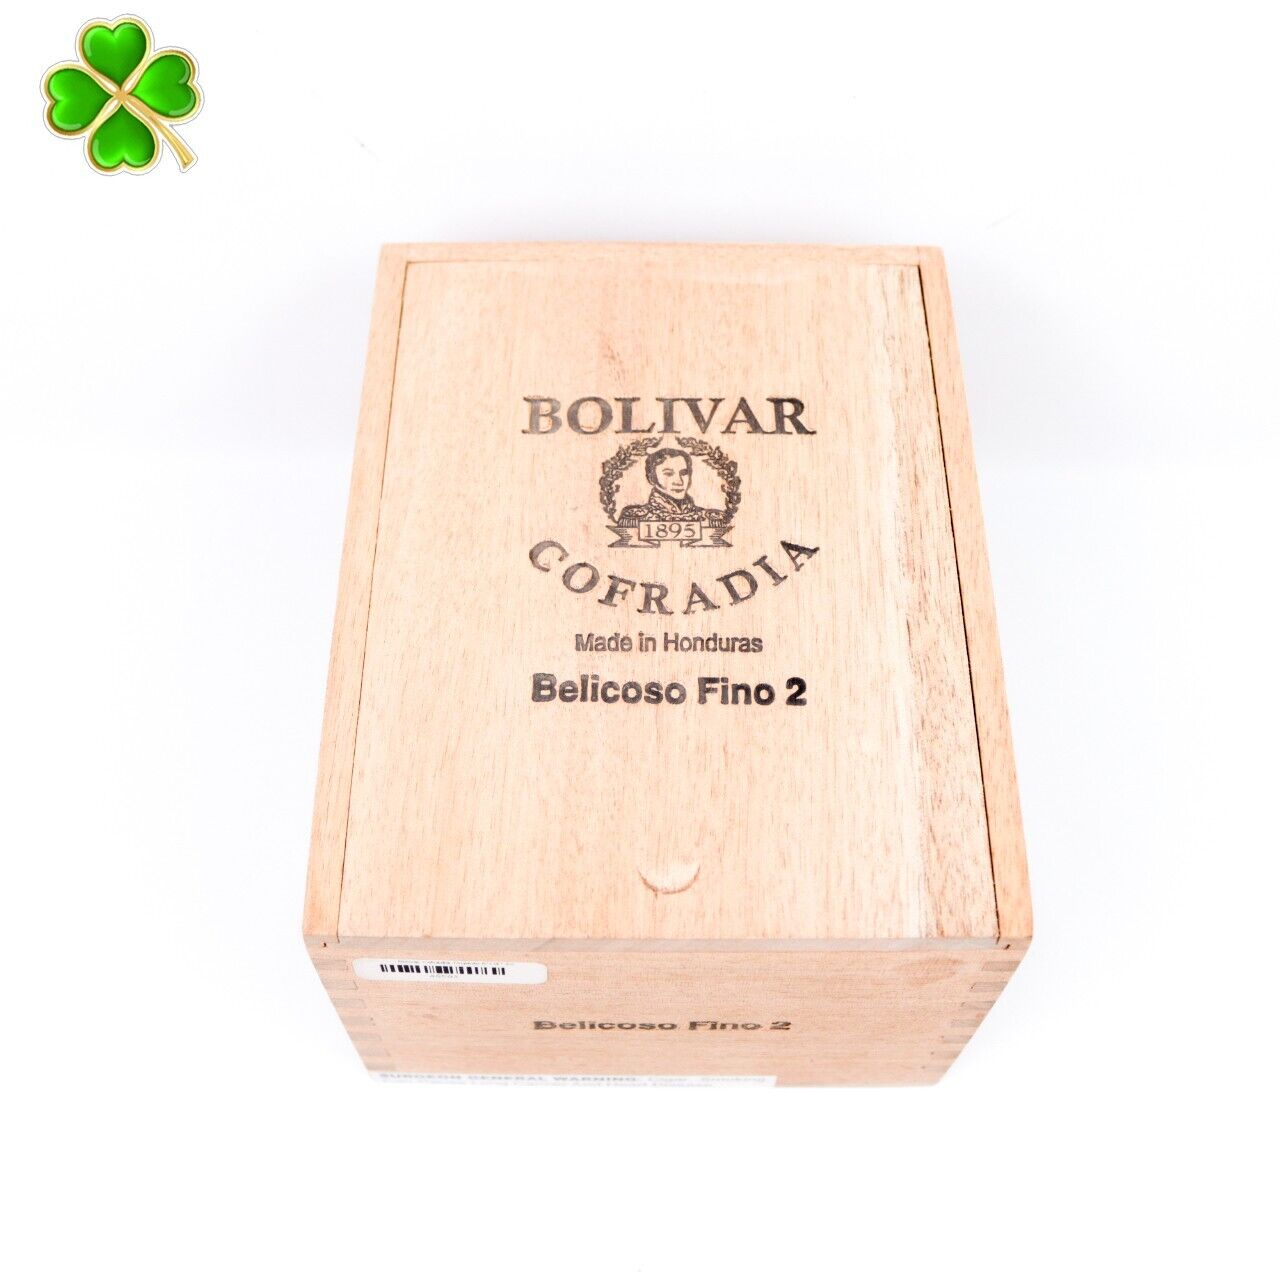 Bolivar Cofradia Belicoso Fino 2 Empty Wood Cigar Box 7\